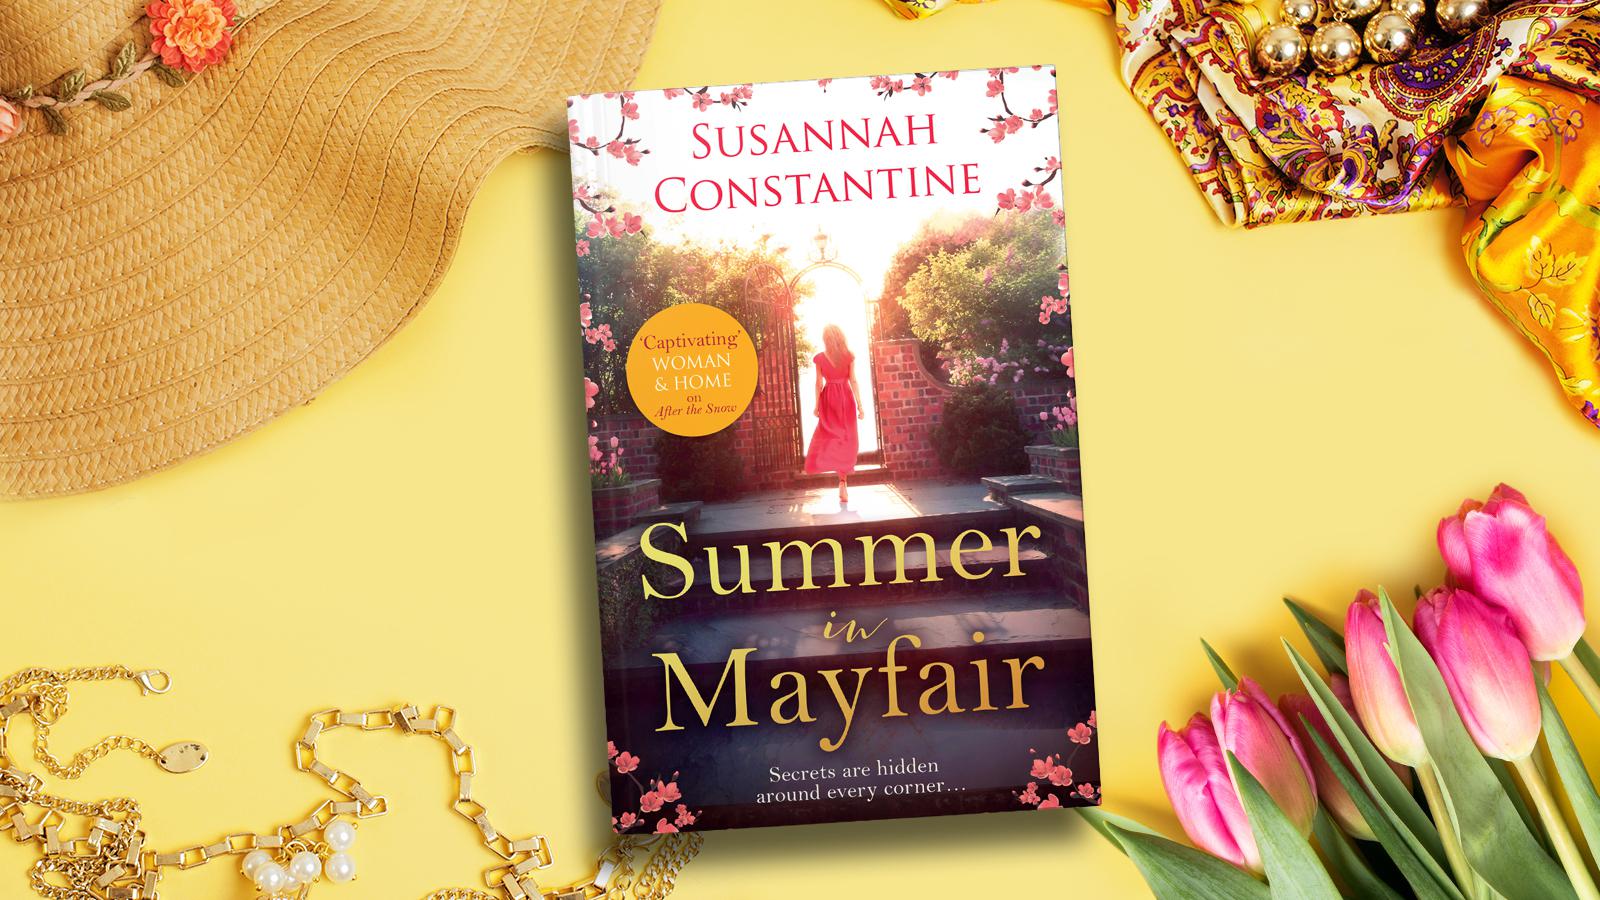 Summer in Mayfair by Susannah Constantine